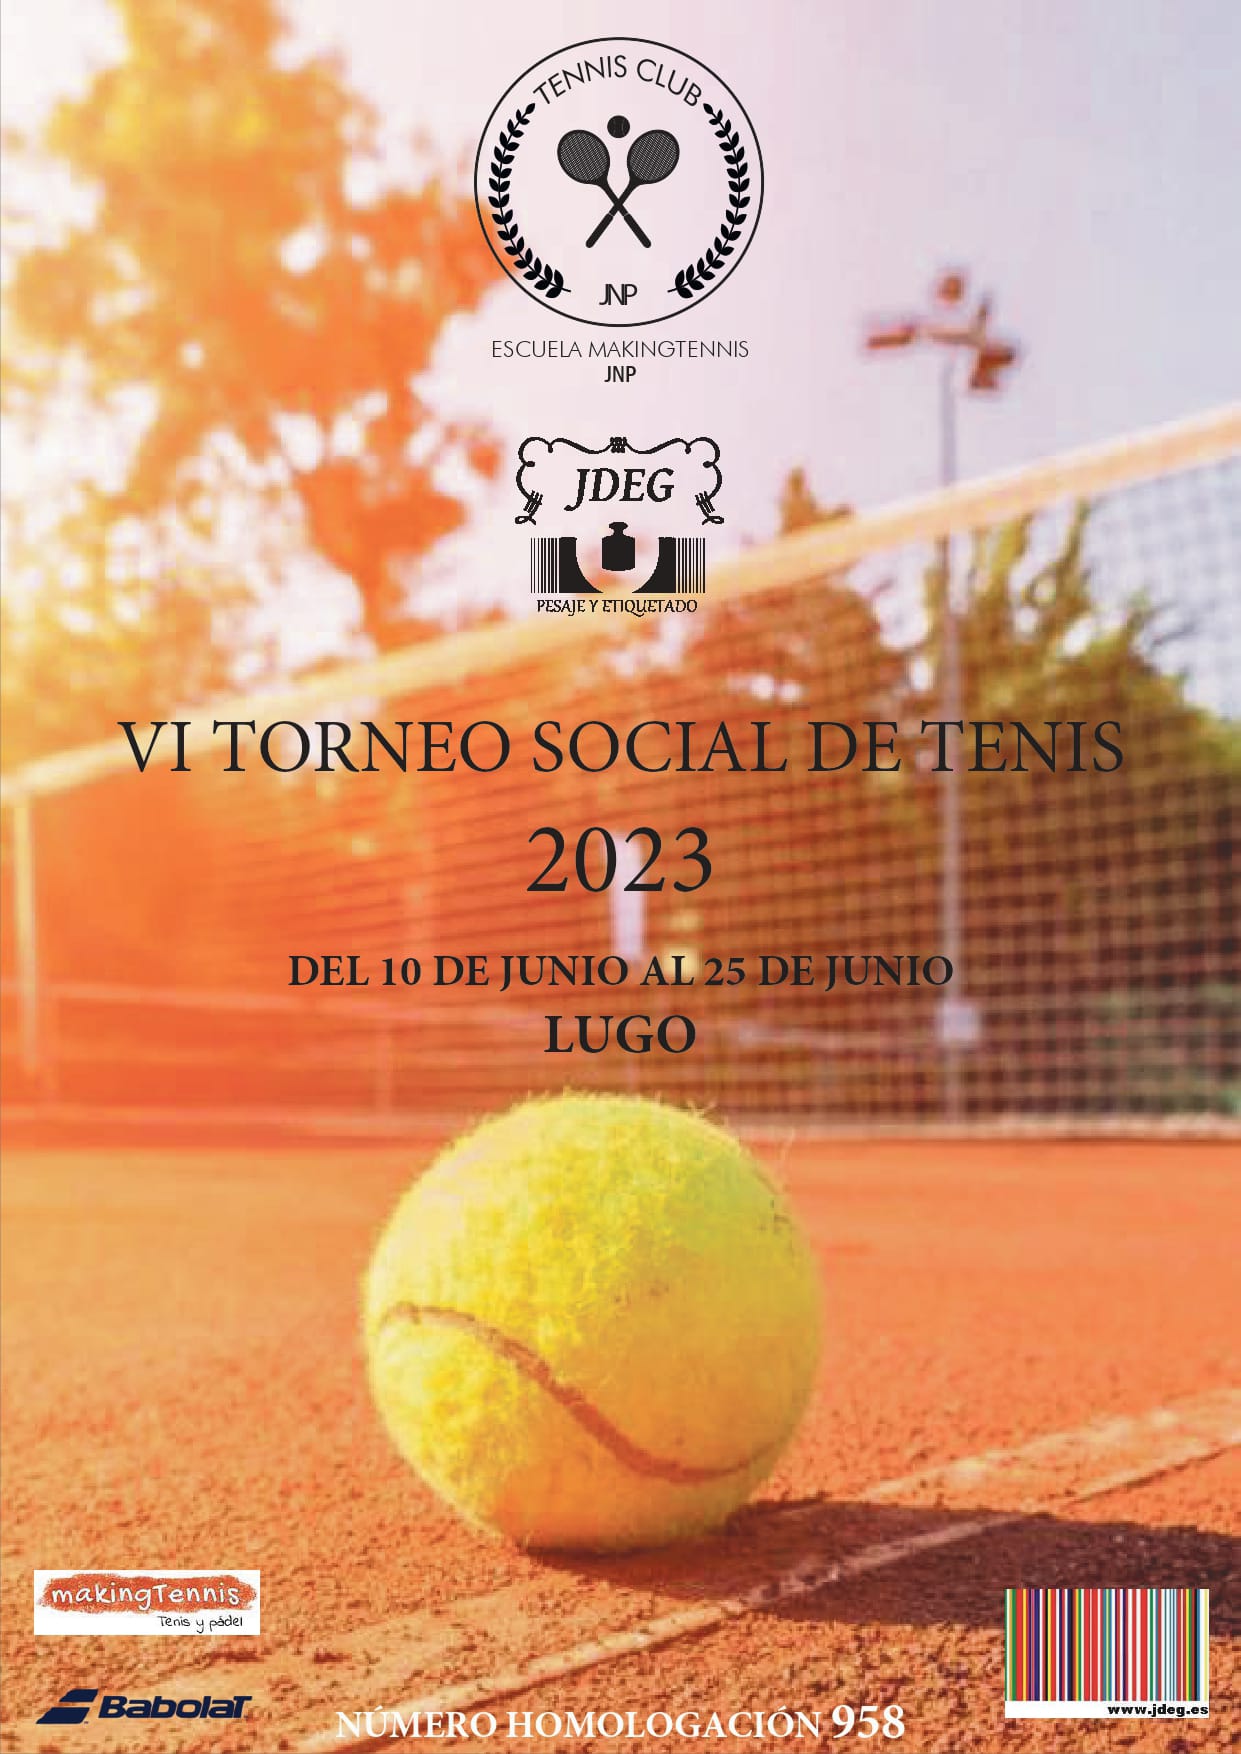 Cartel del VI Torneo social Escuela MAKINGTENNIS JNP JDEG